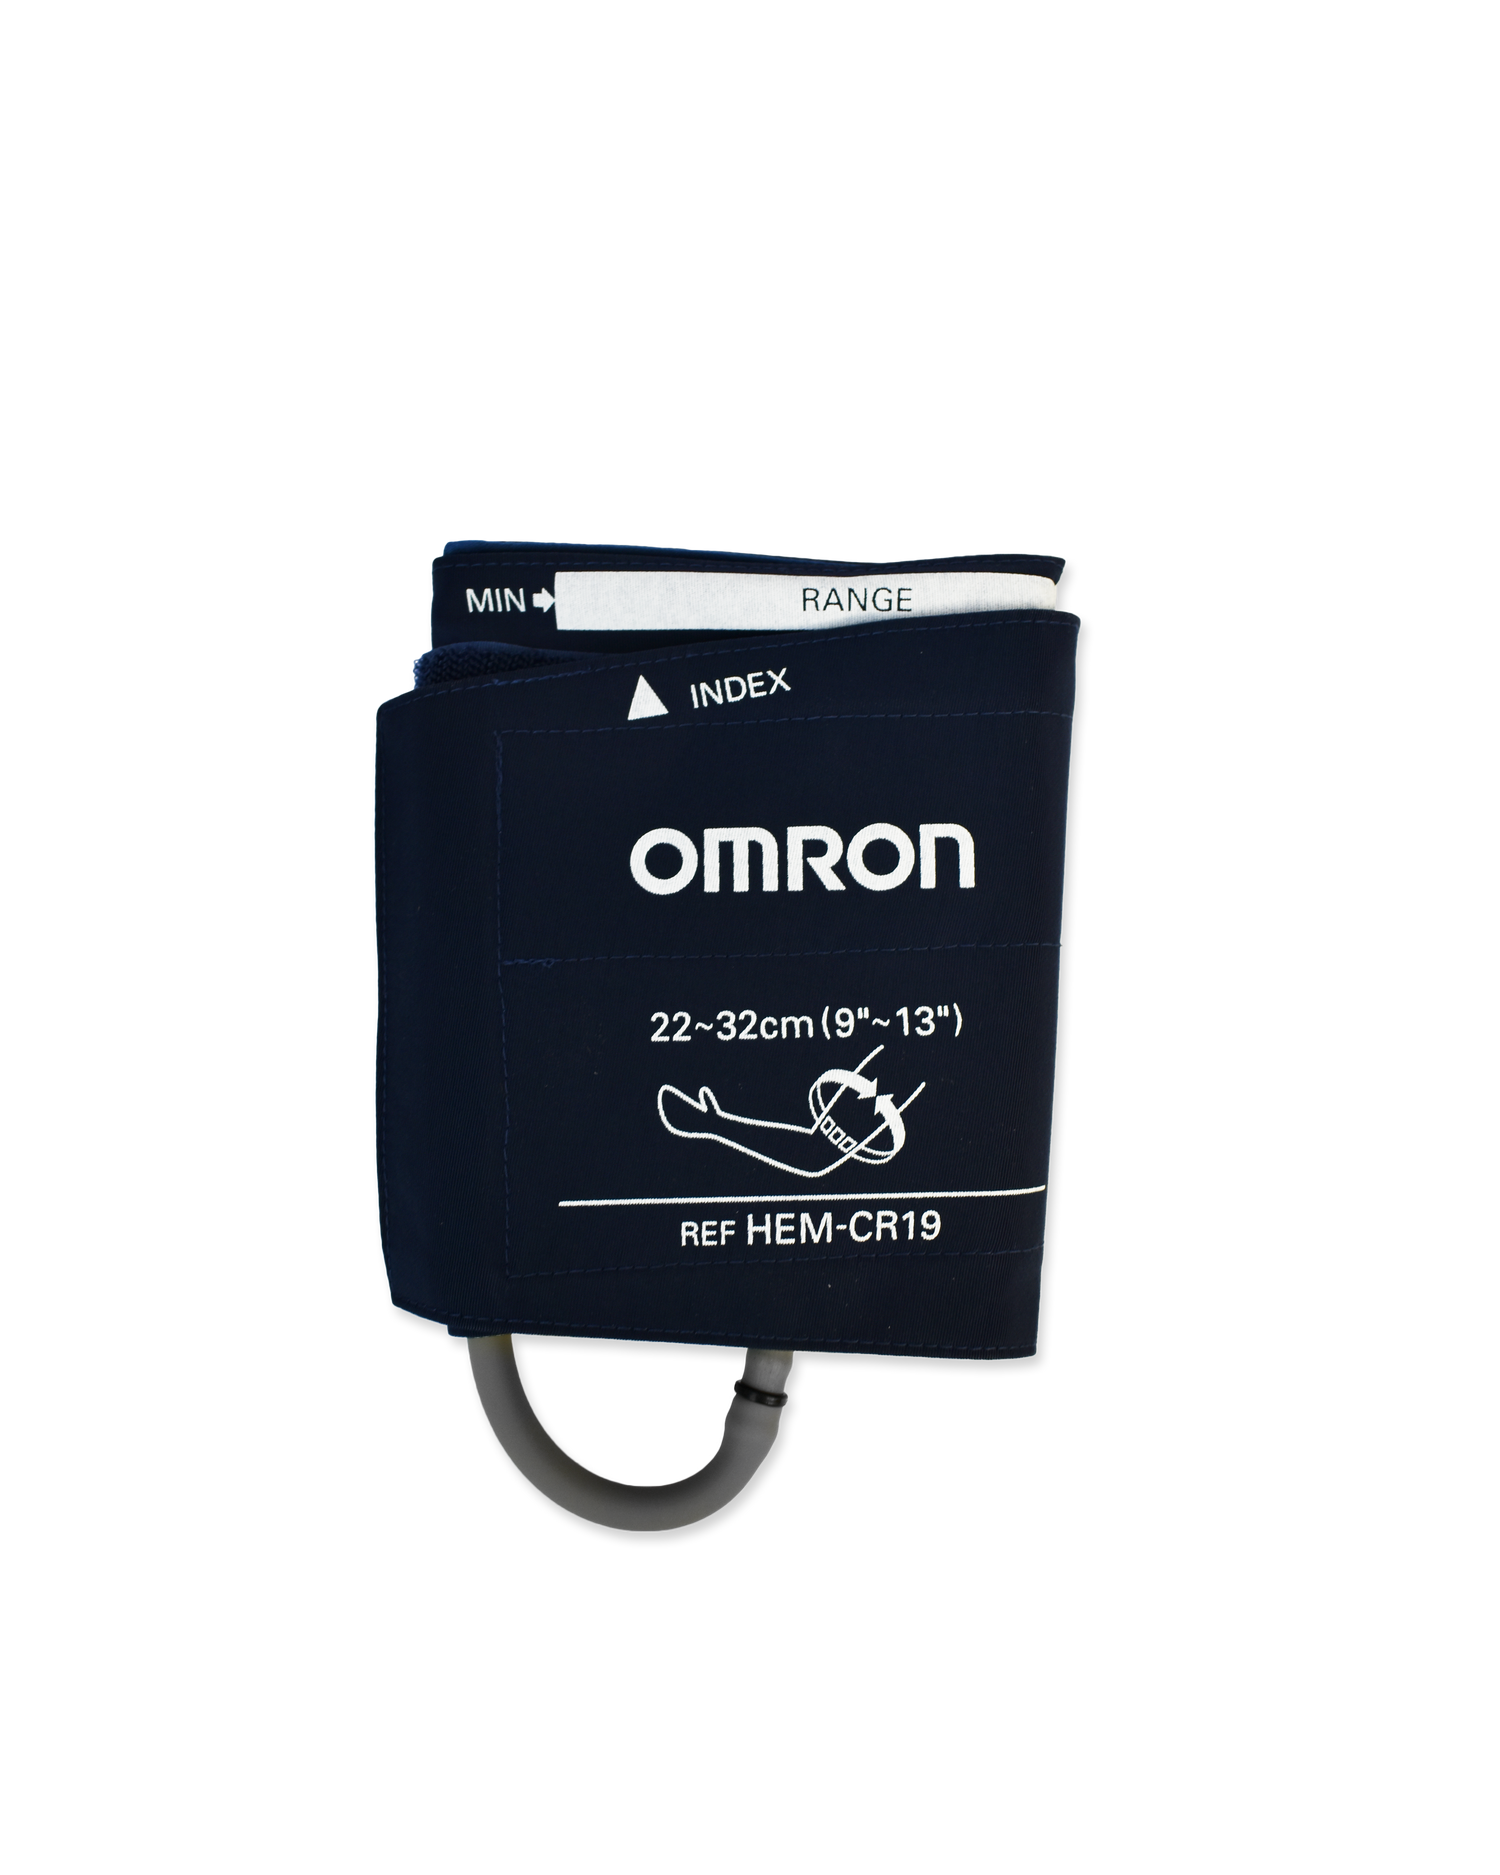 Omron Professional Intellisense® Blood Pressure Monitor HEM-907XL 